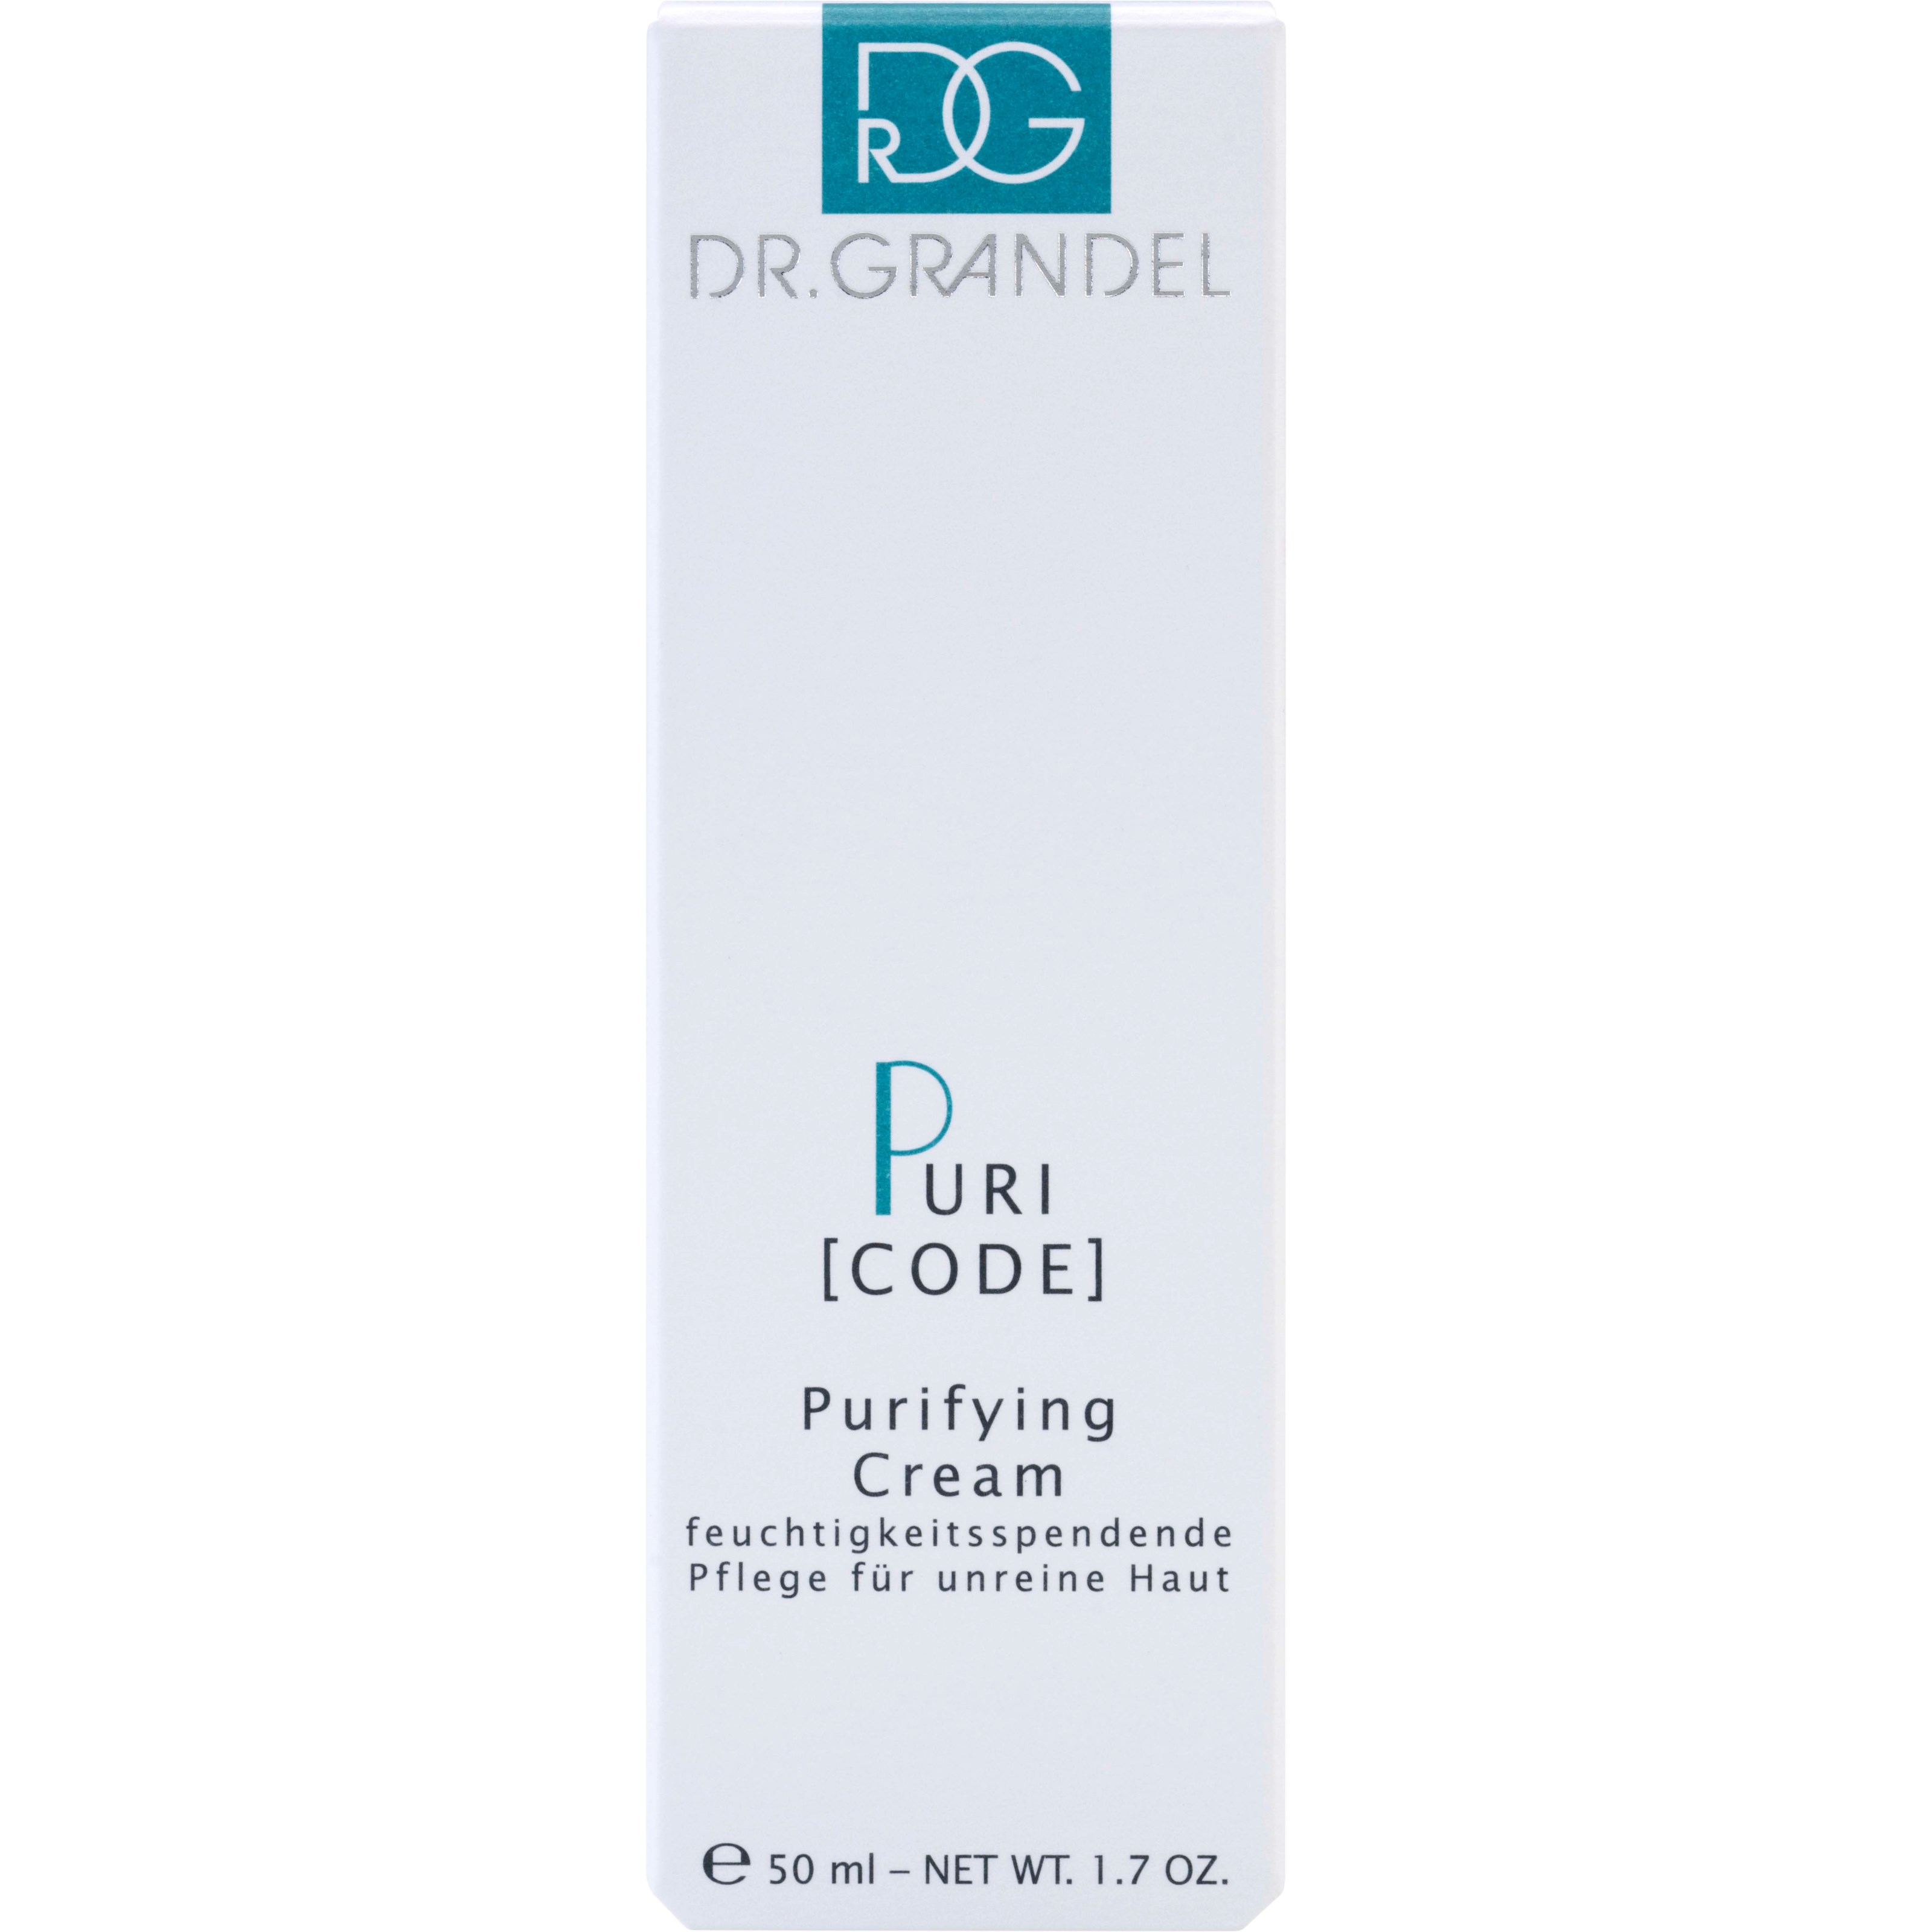 Dr. Grandel Puricode Purifying Cream 50 ml